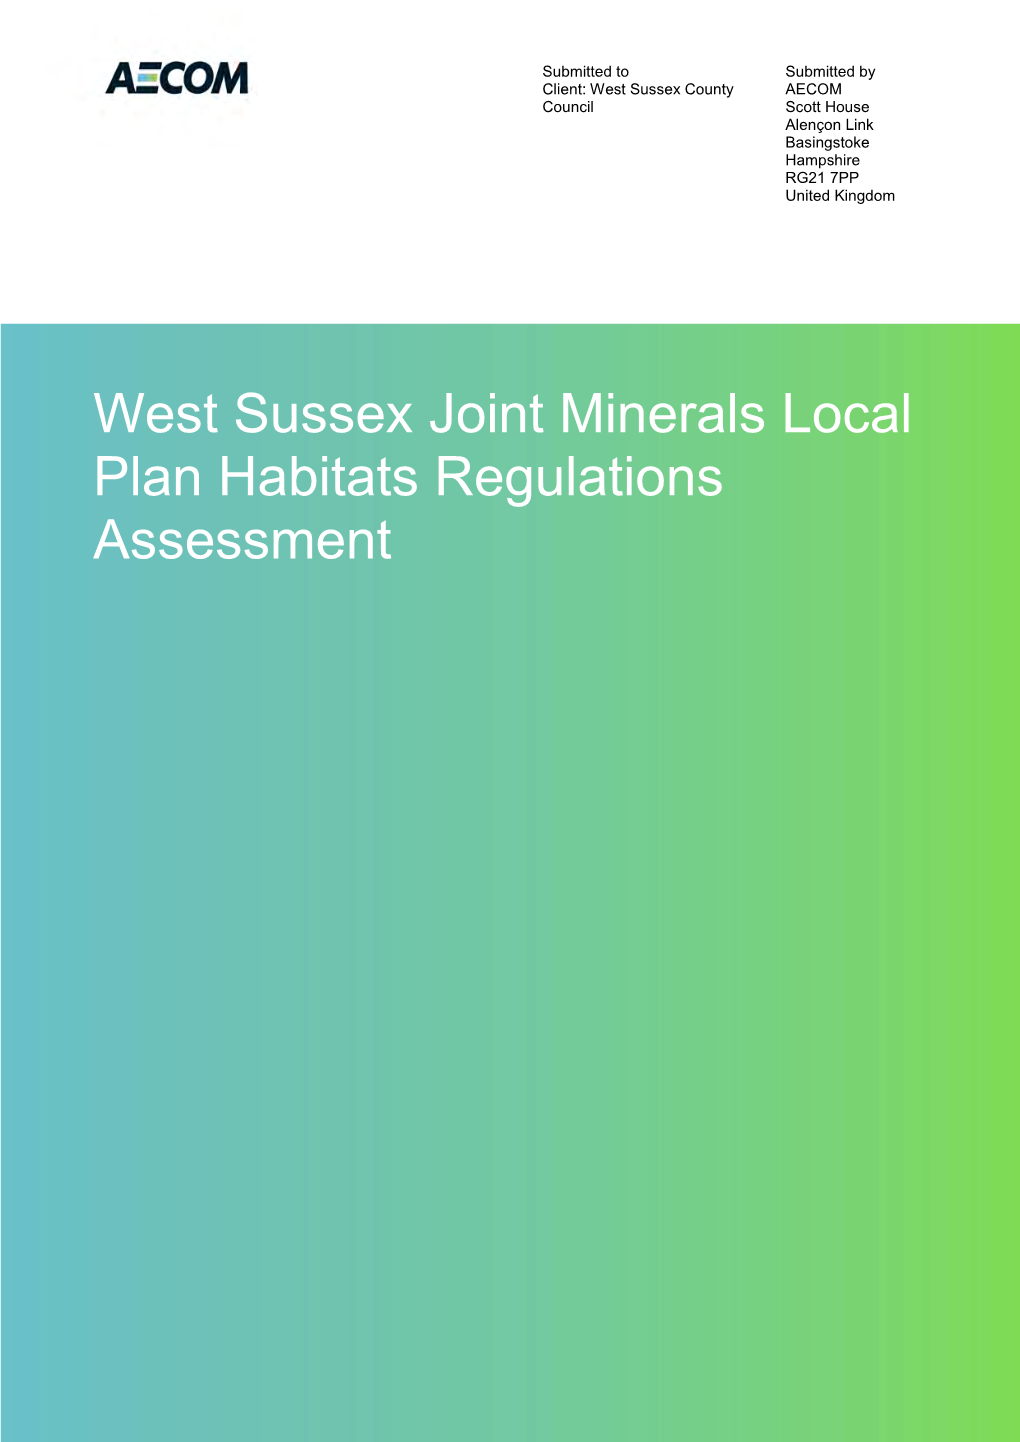 West Sussex Joint Minerals Local Plan Habitats Regulation Assessment